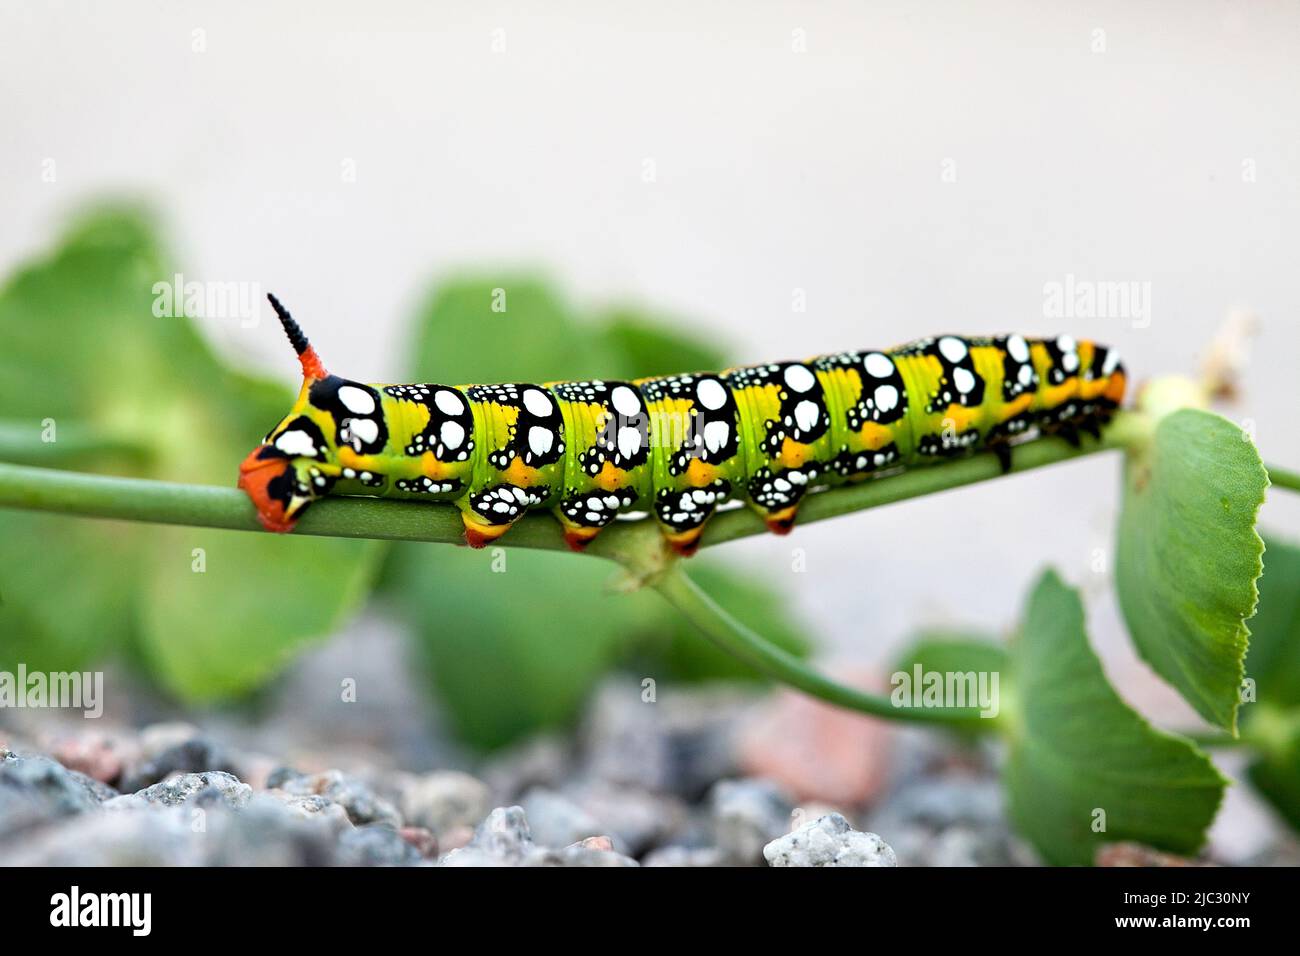 Tomato hornworm caterpillar. Stock Photo